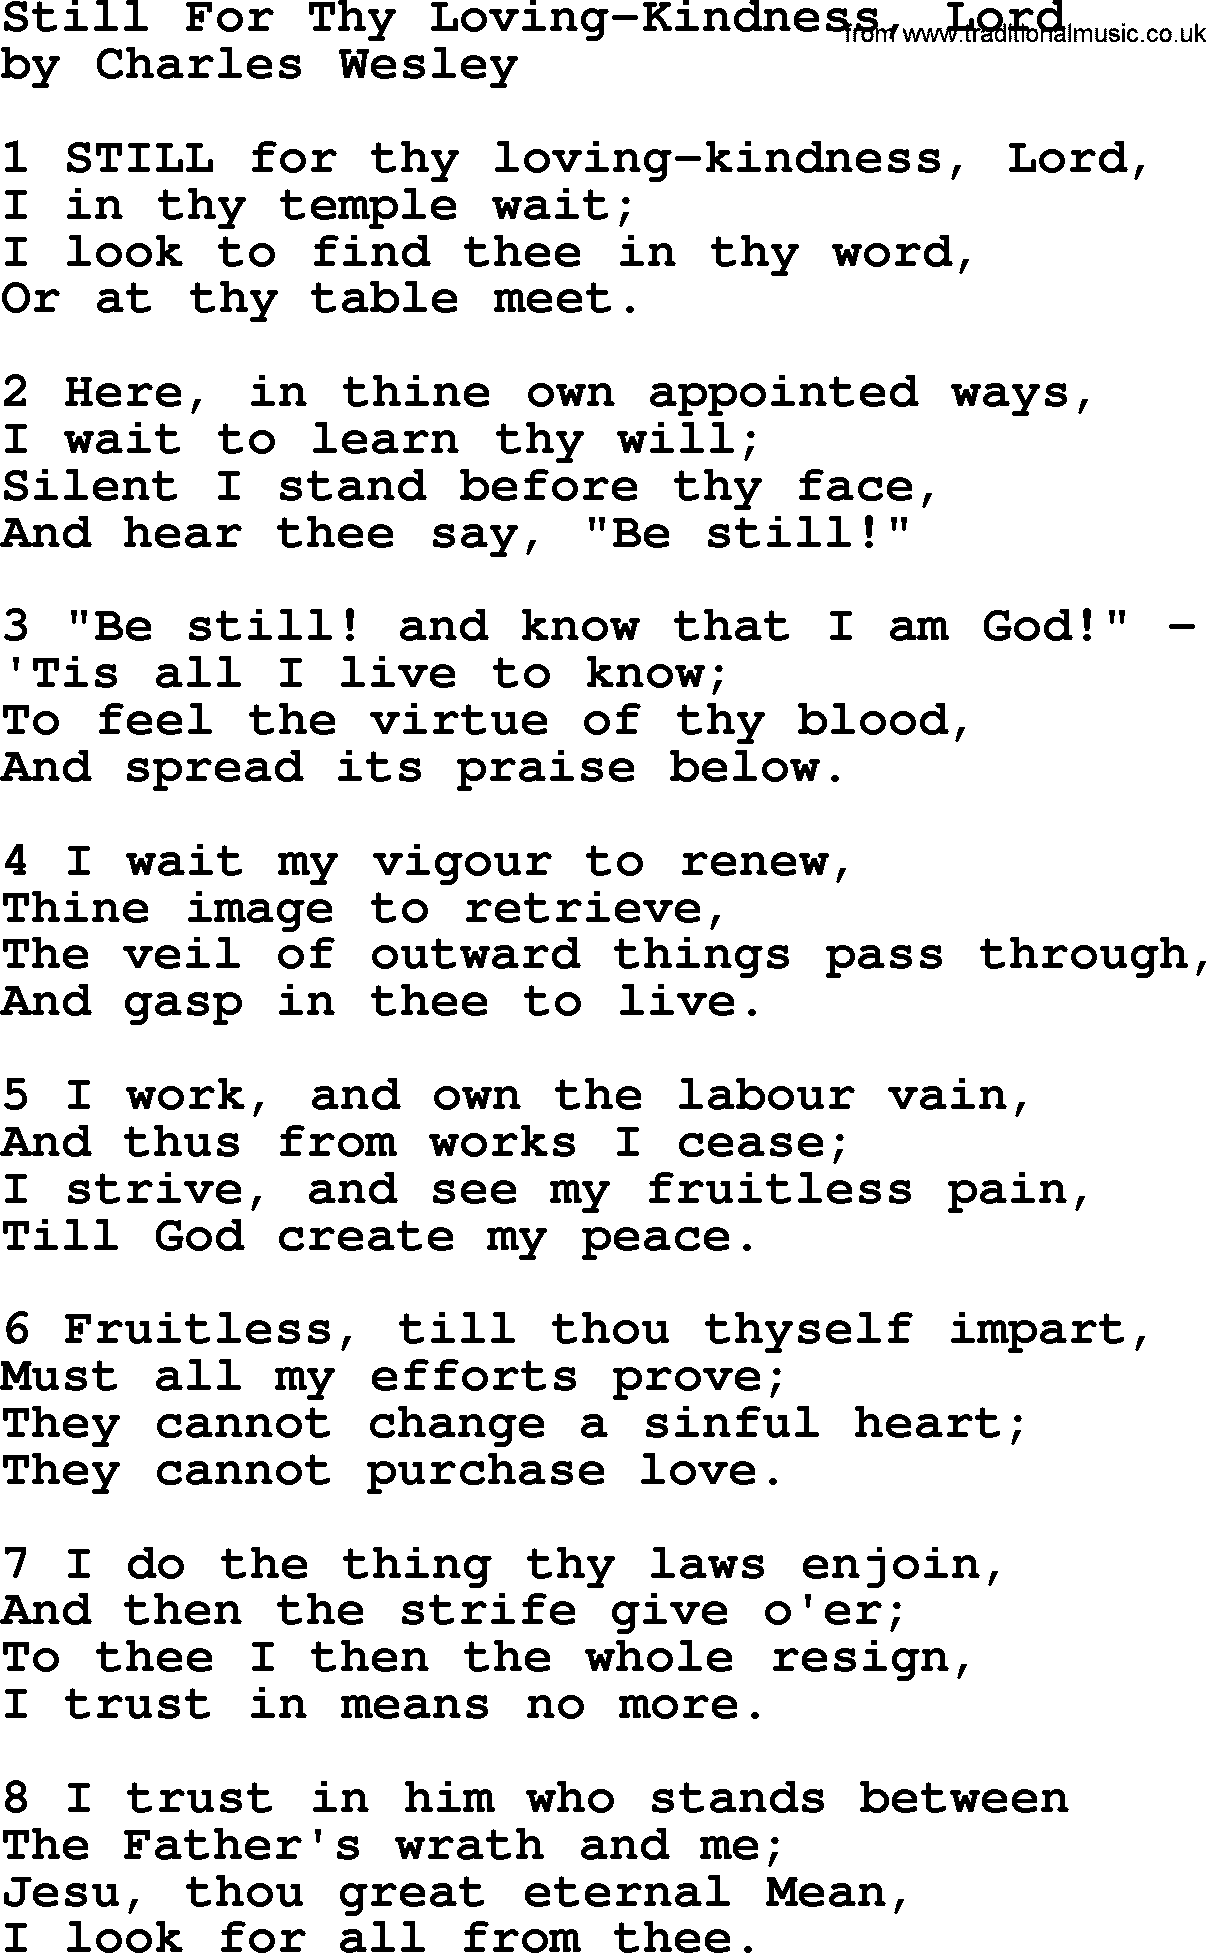 Charles Wesley hymn: Still For Thy Loving-Kindness, Lord, lyrics